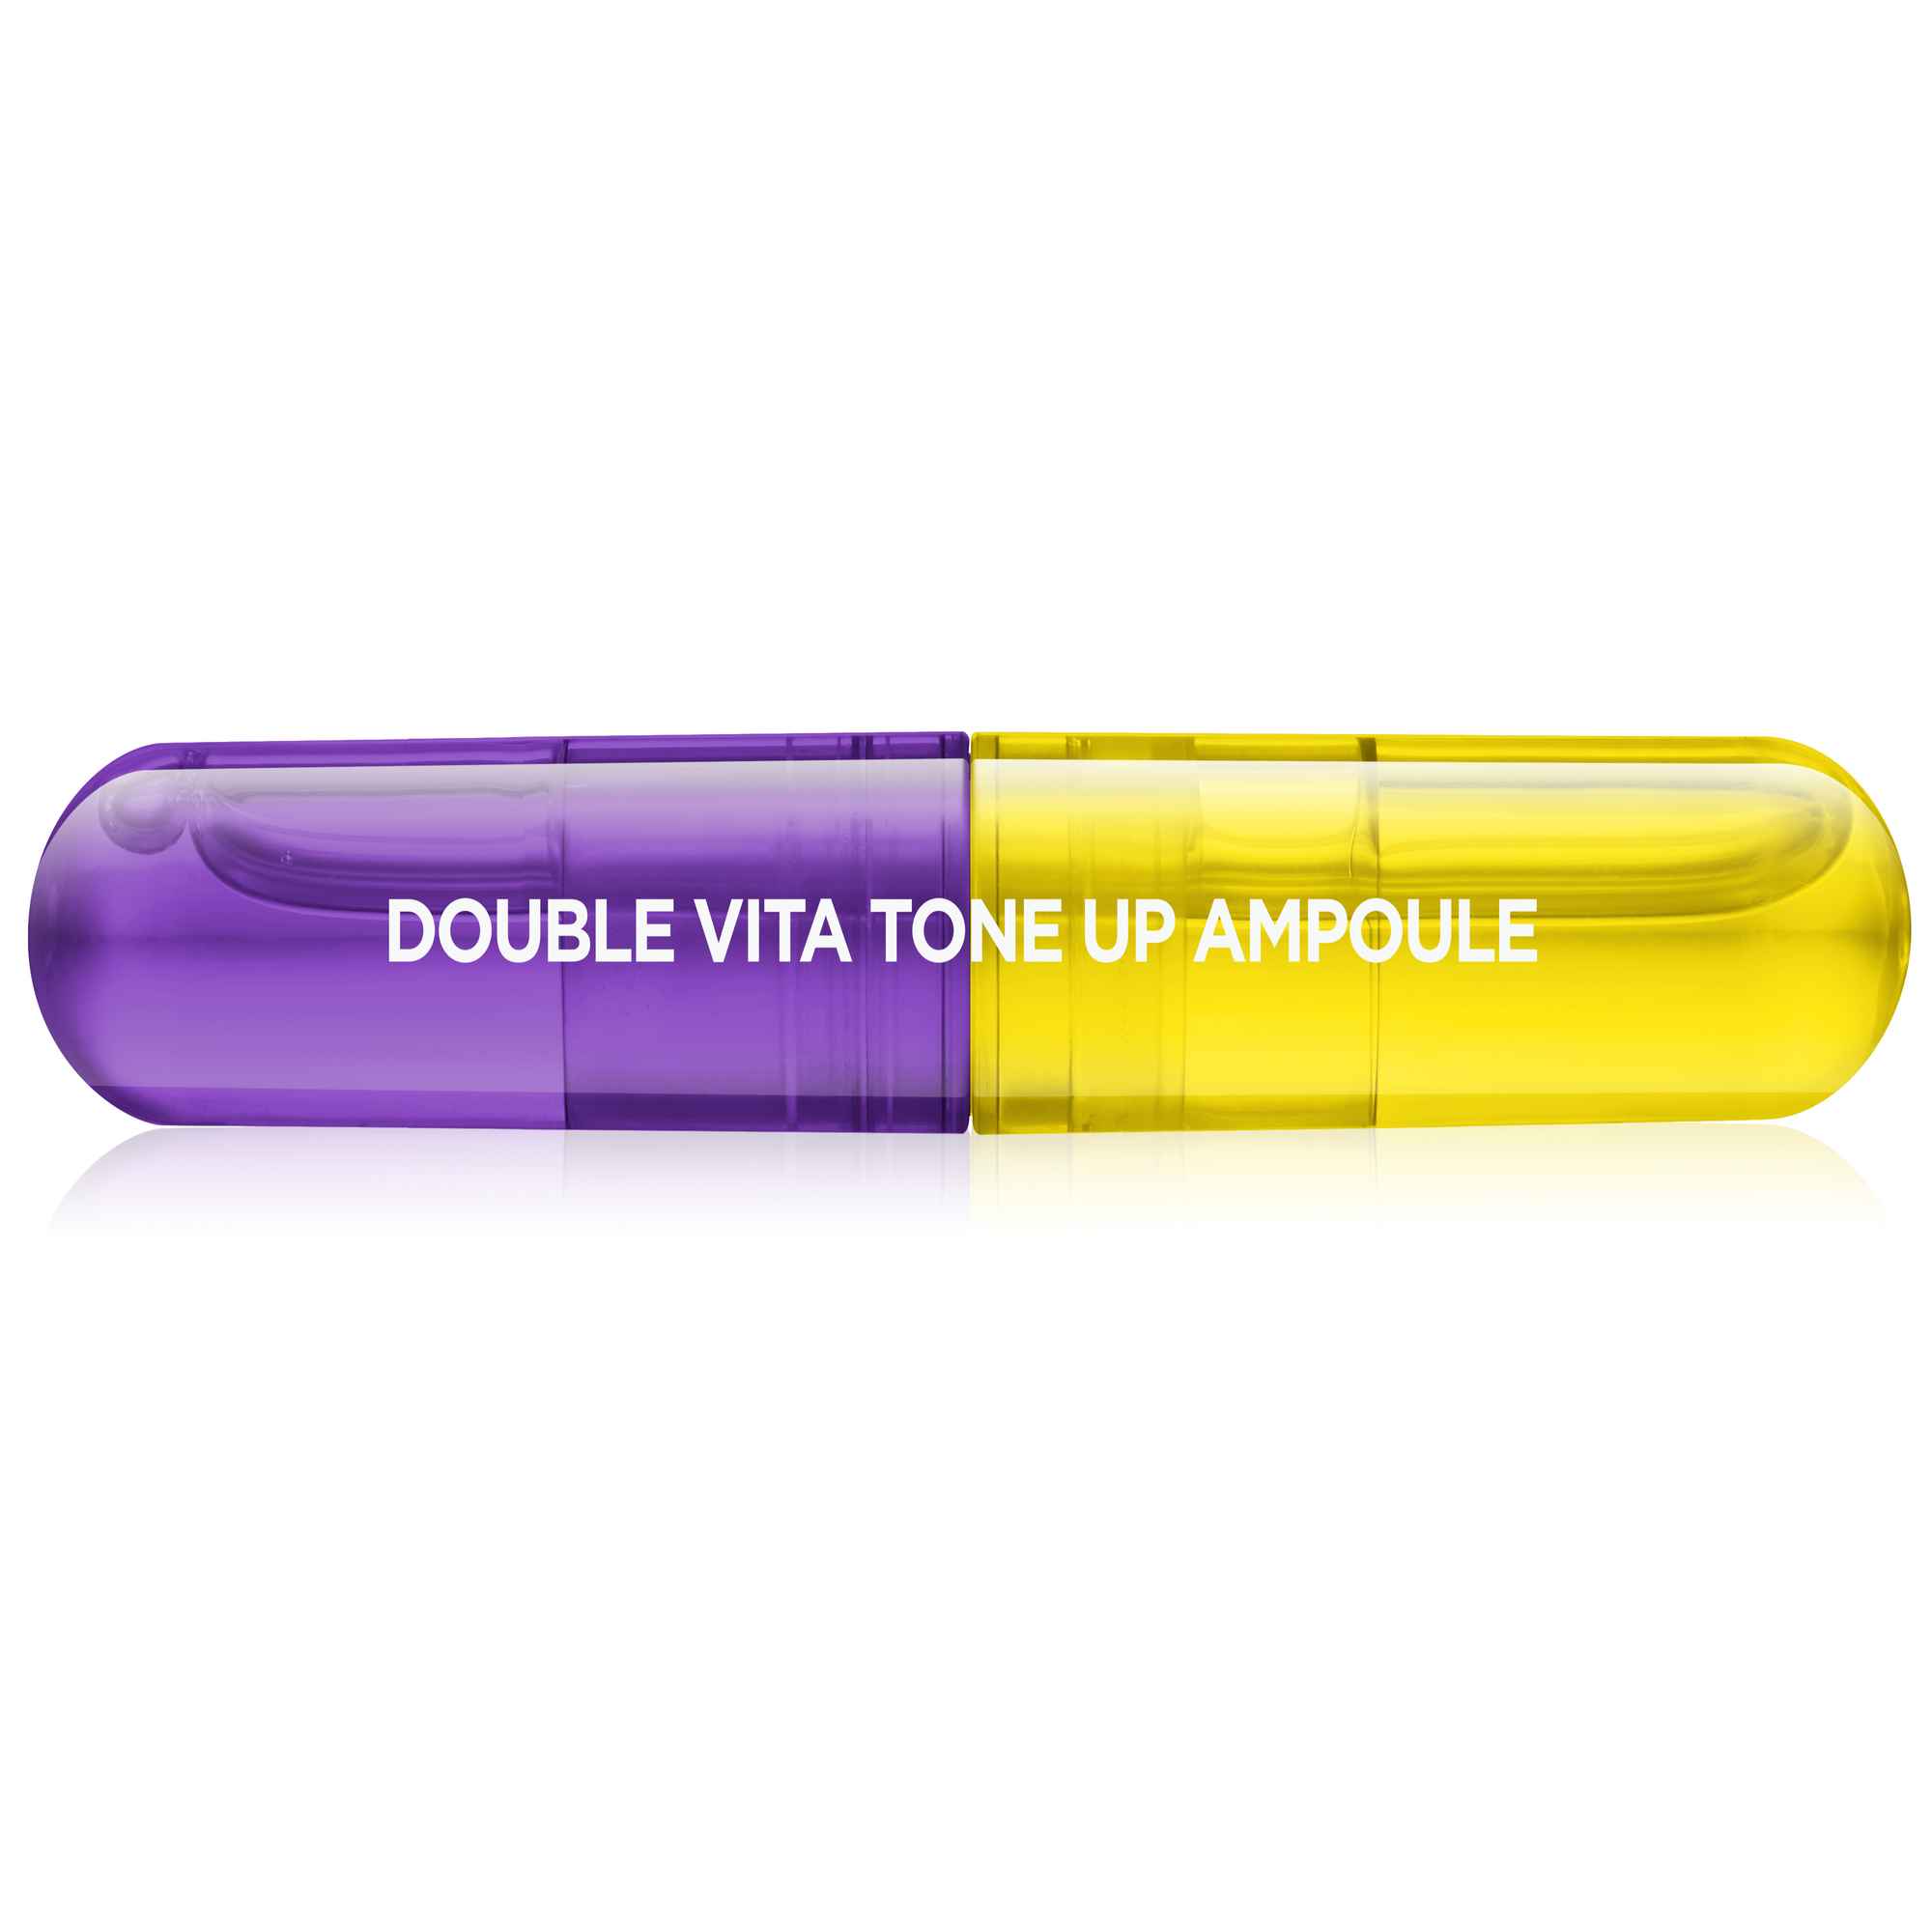 NEOGEN DERMALOGY Double Vita Tone Up Ampoule Mask (30g+3g) (5pack)